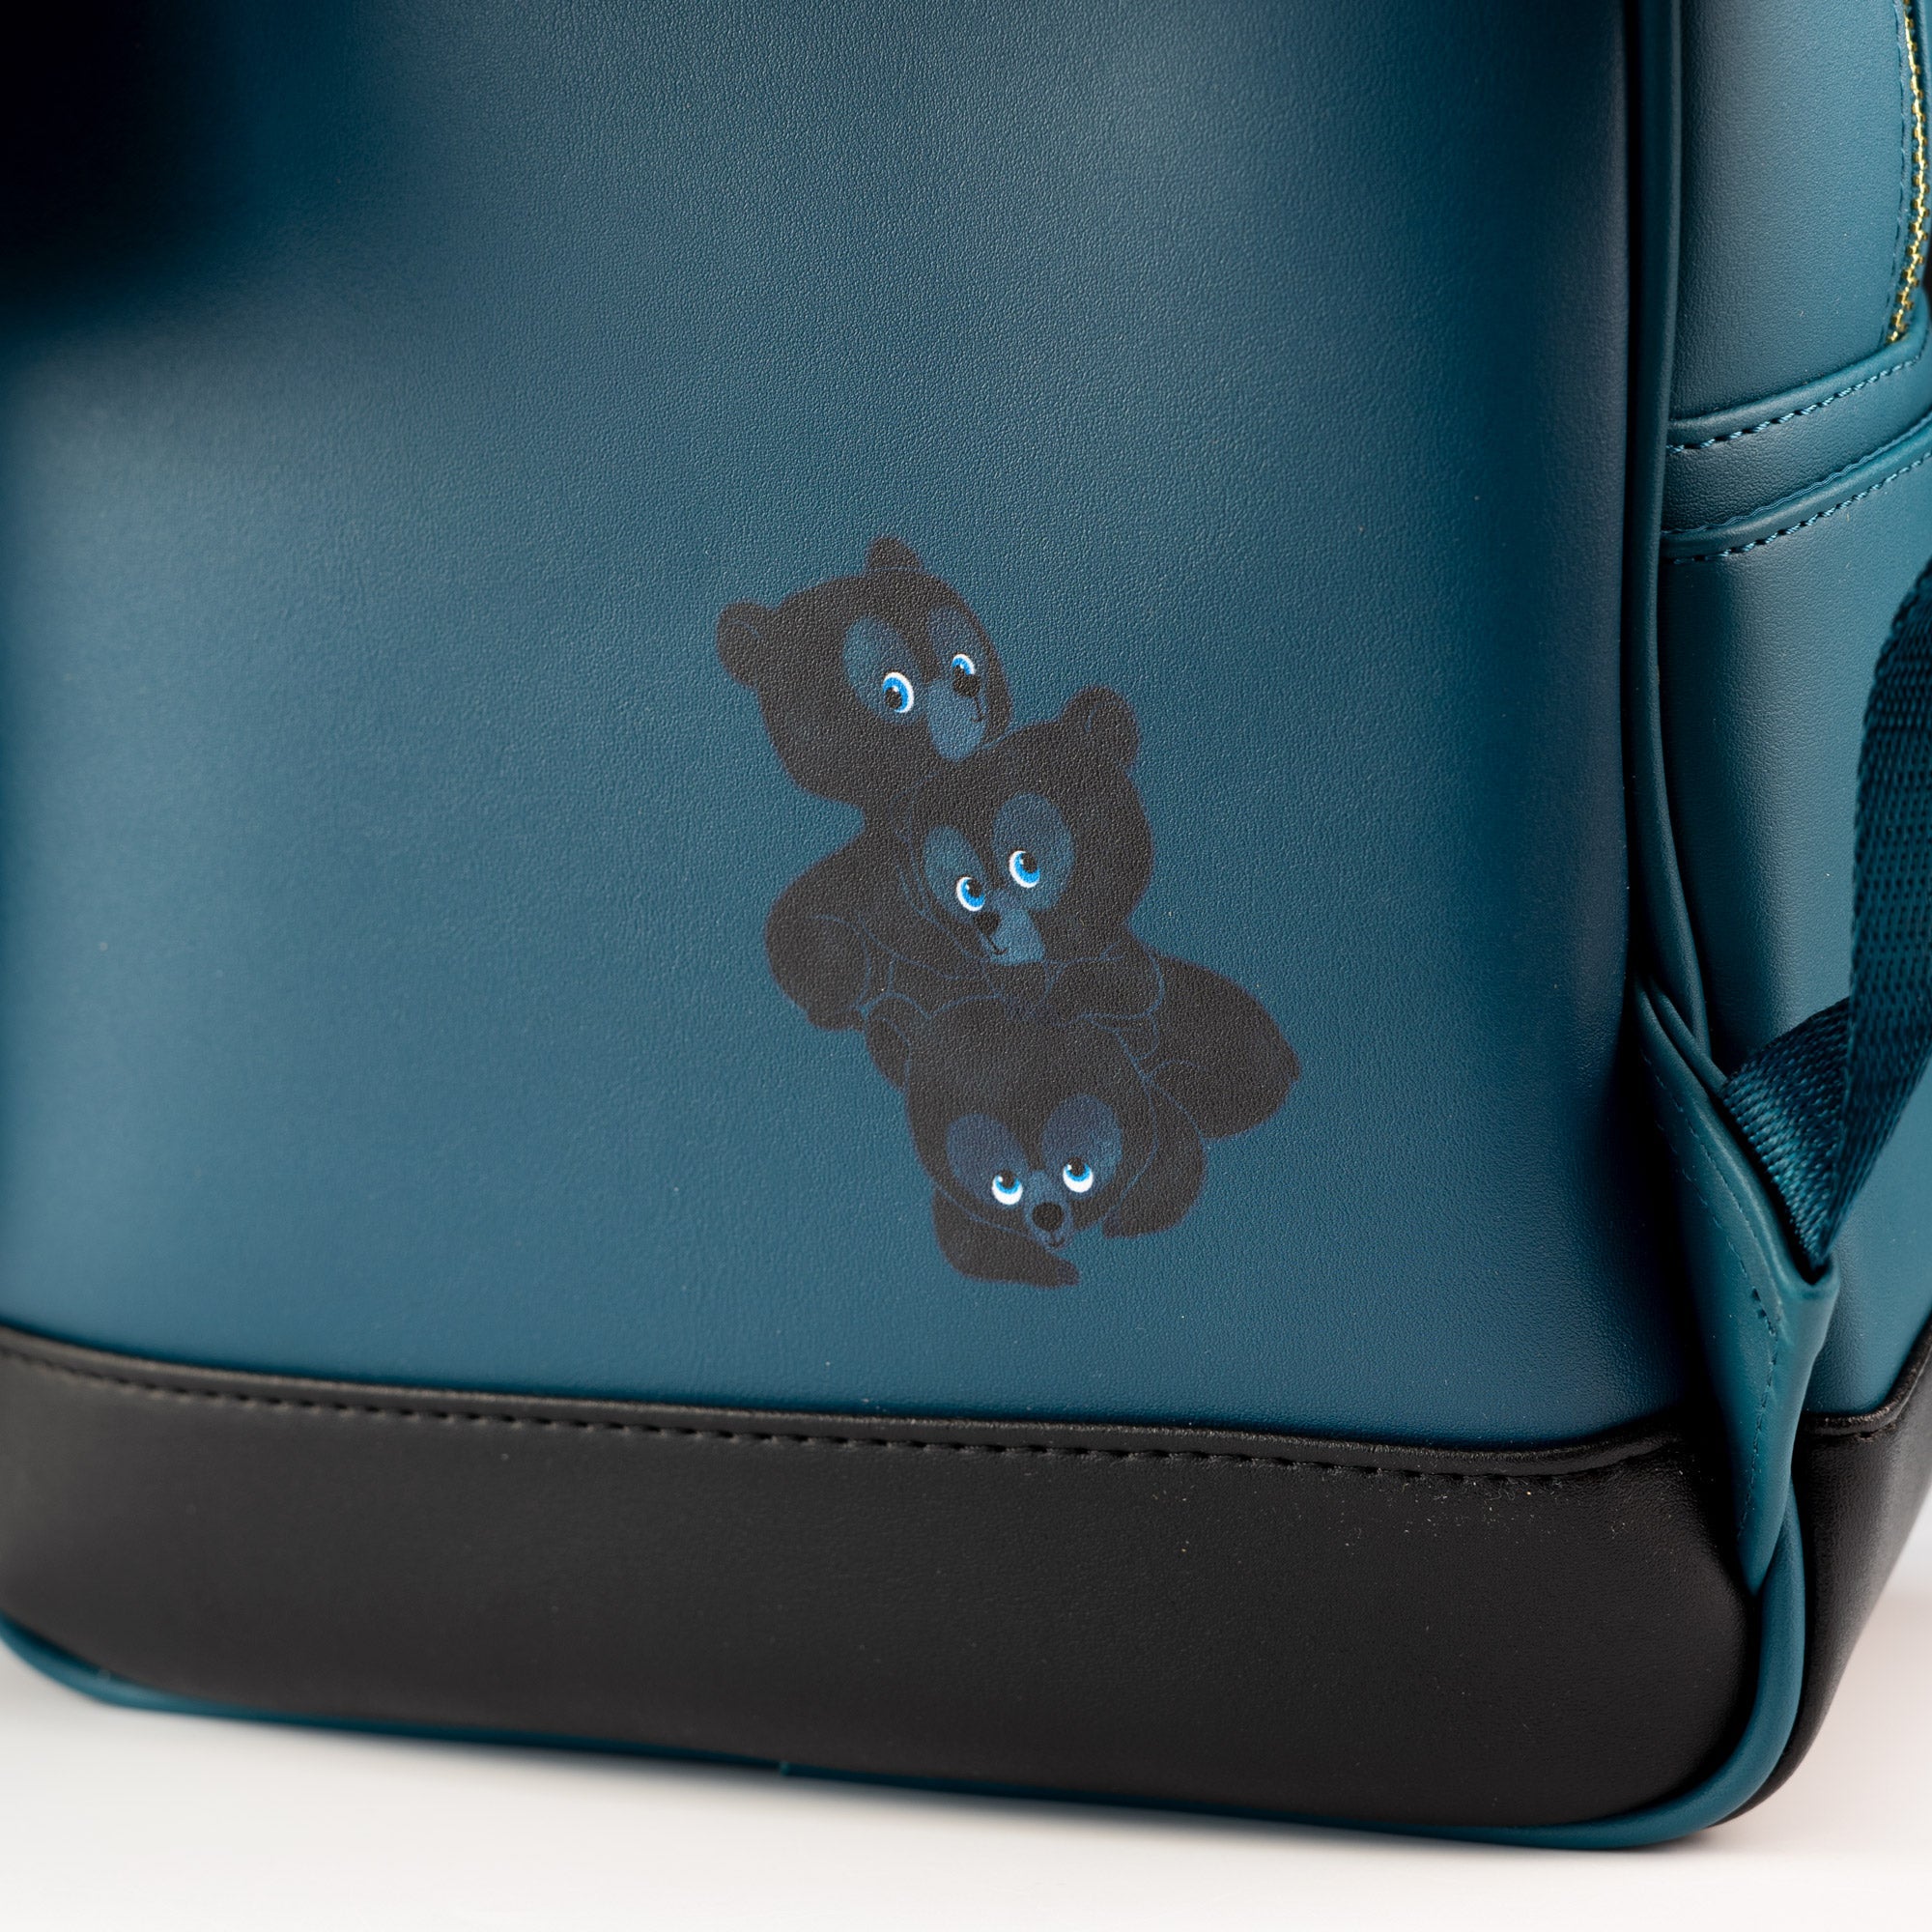 Loungefly x Disney Pixar Brave Merida Hiding Scene Mini Backpack - GeekCore